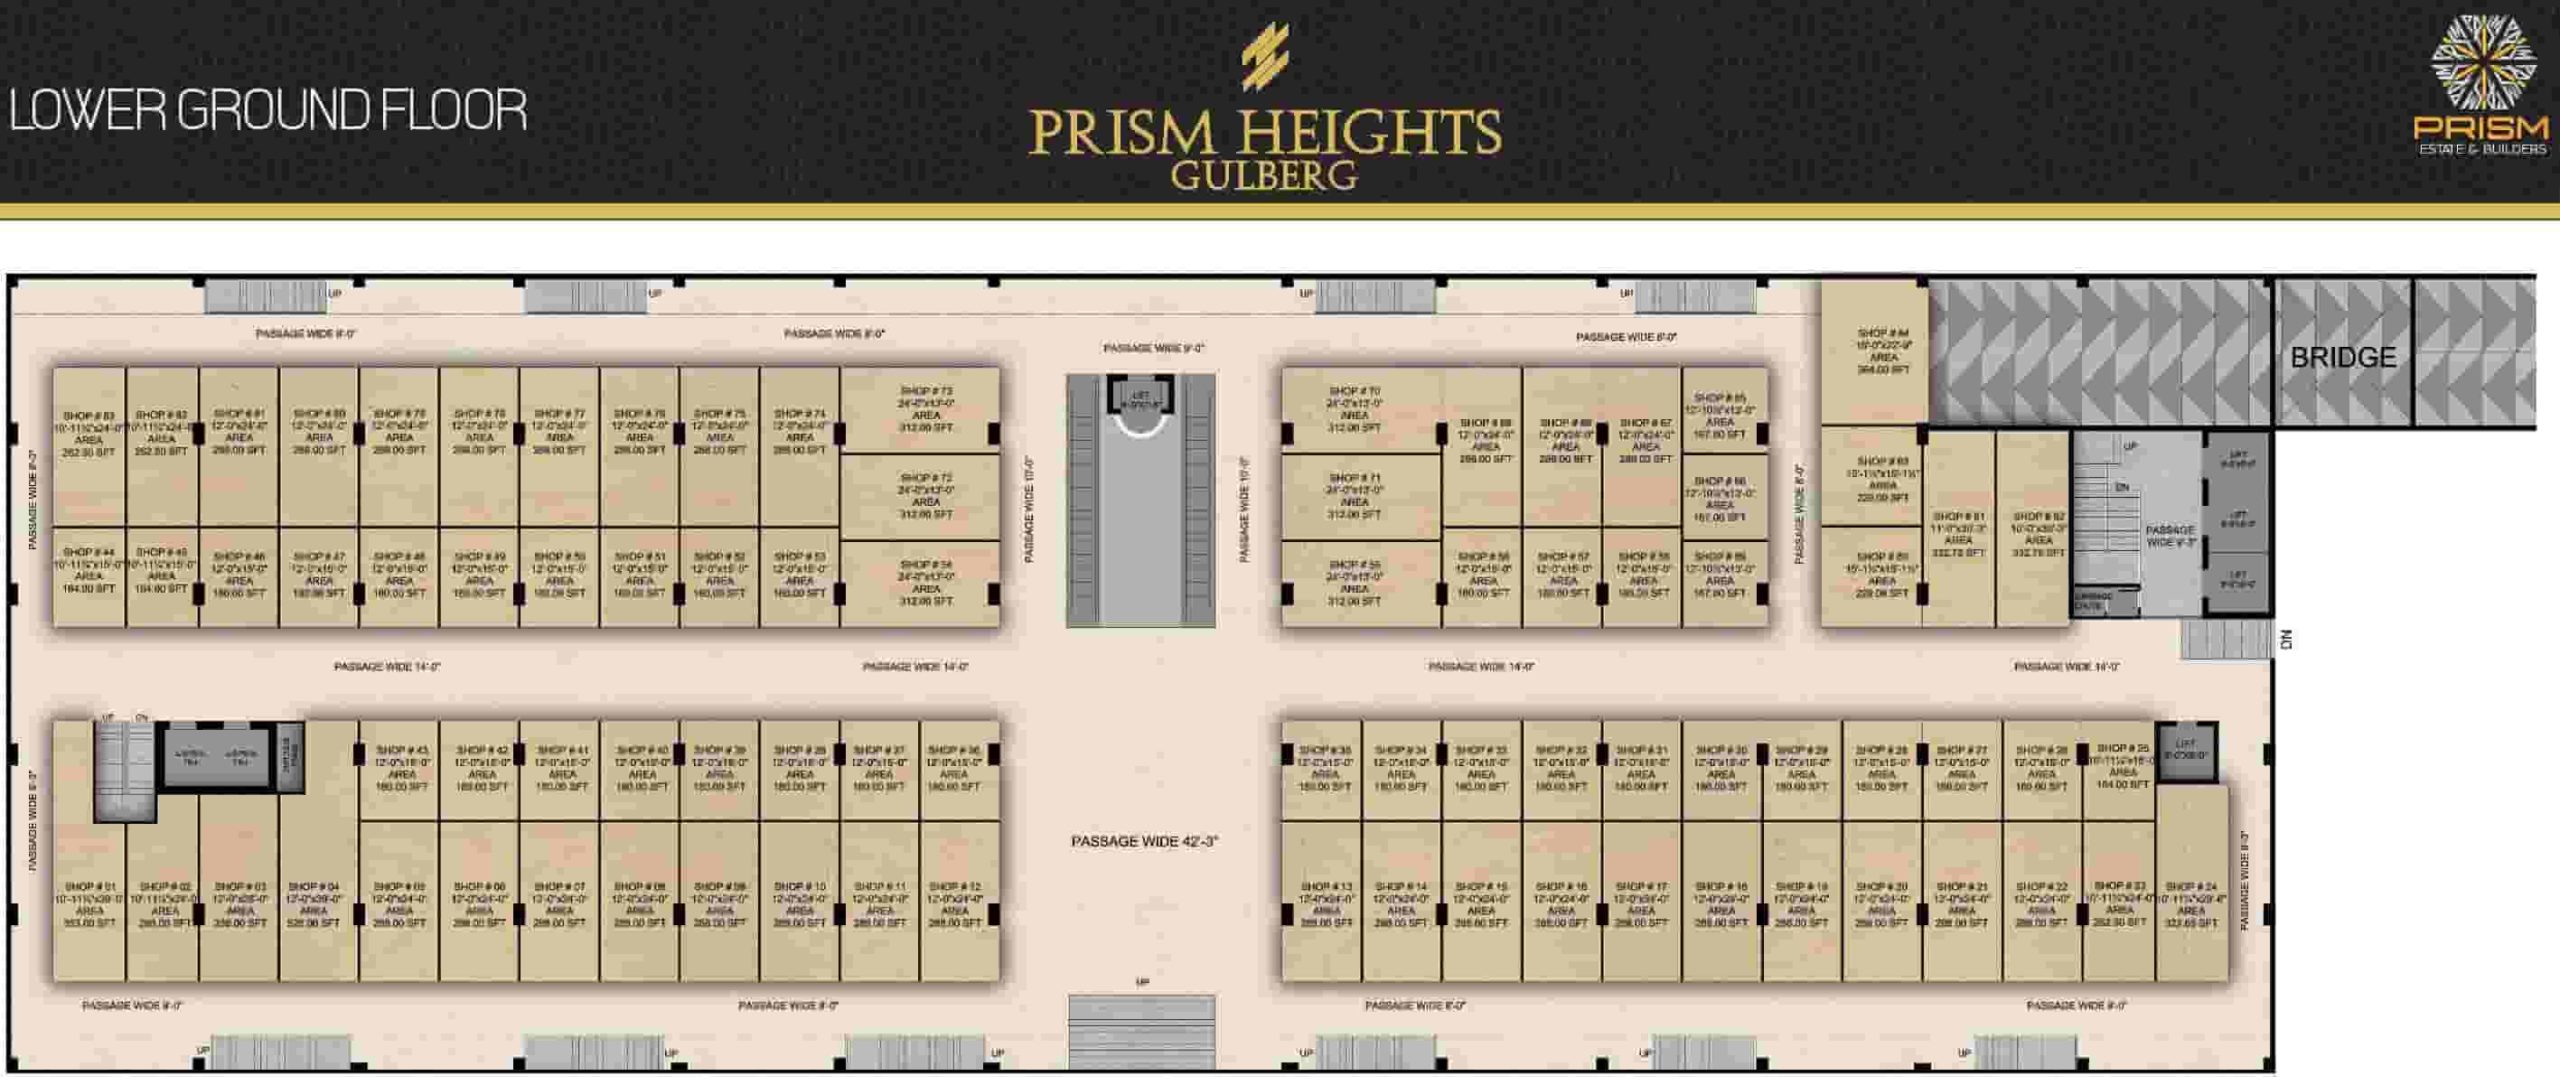 Prism Heights Lower Ground Floor Plan